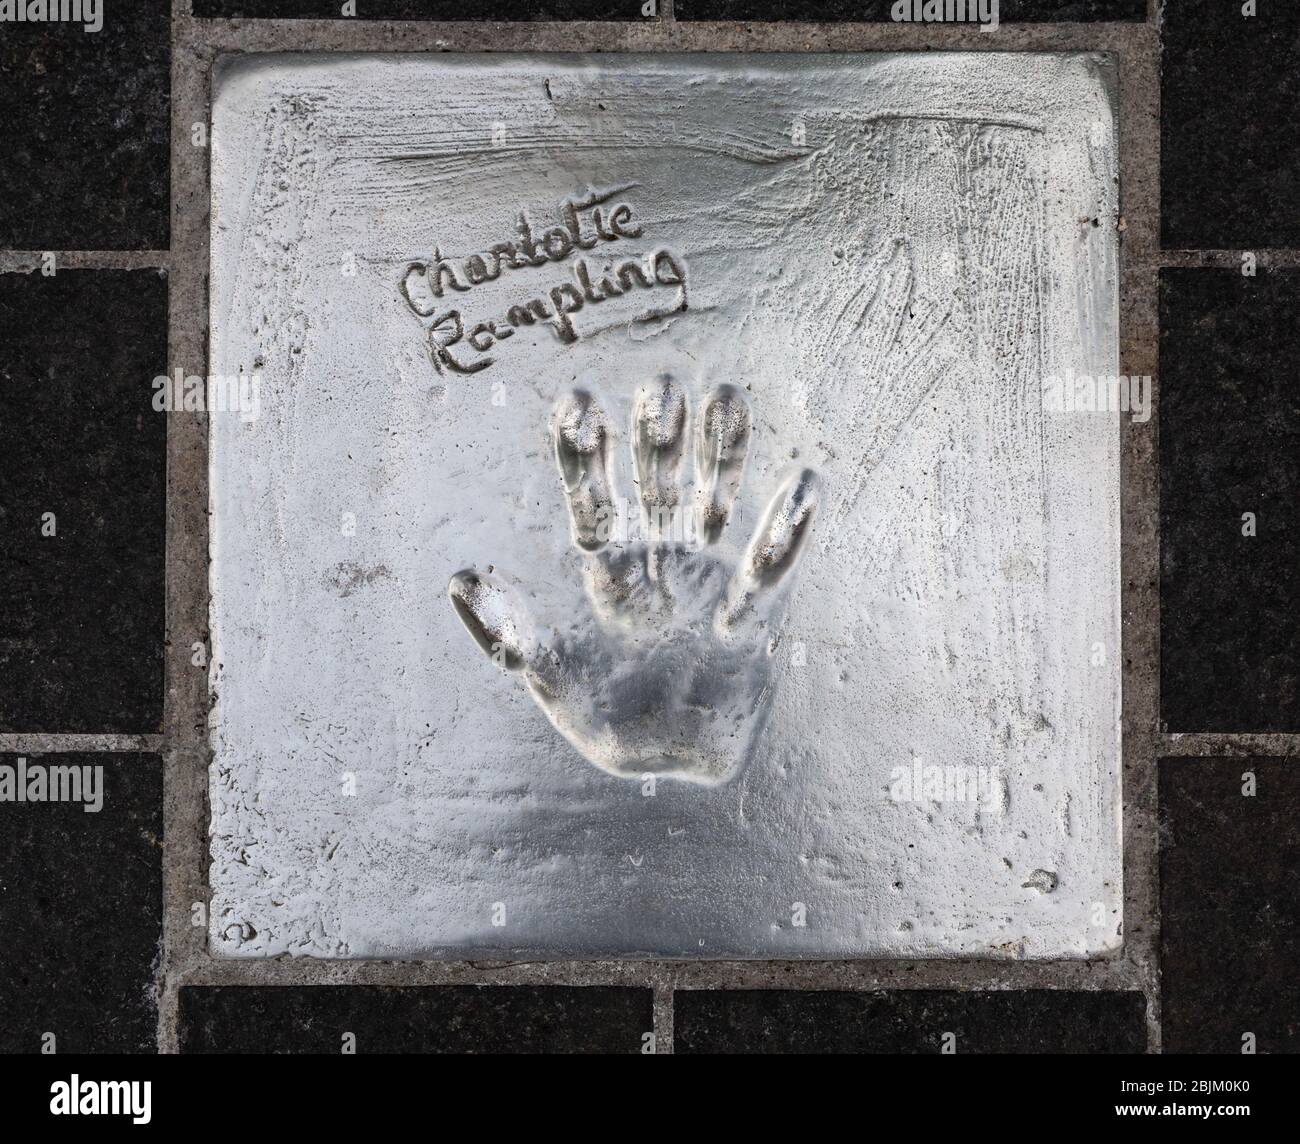 Charlotte Ramplings Handprint, Avenue of Stars, Cannes, Cote d'Azur, Provence, Frankreich. Stockfoto